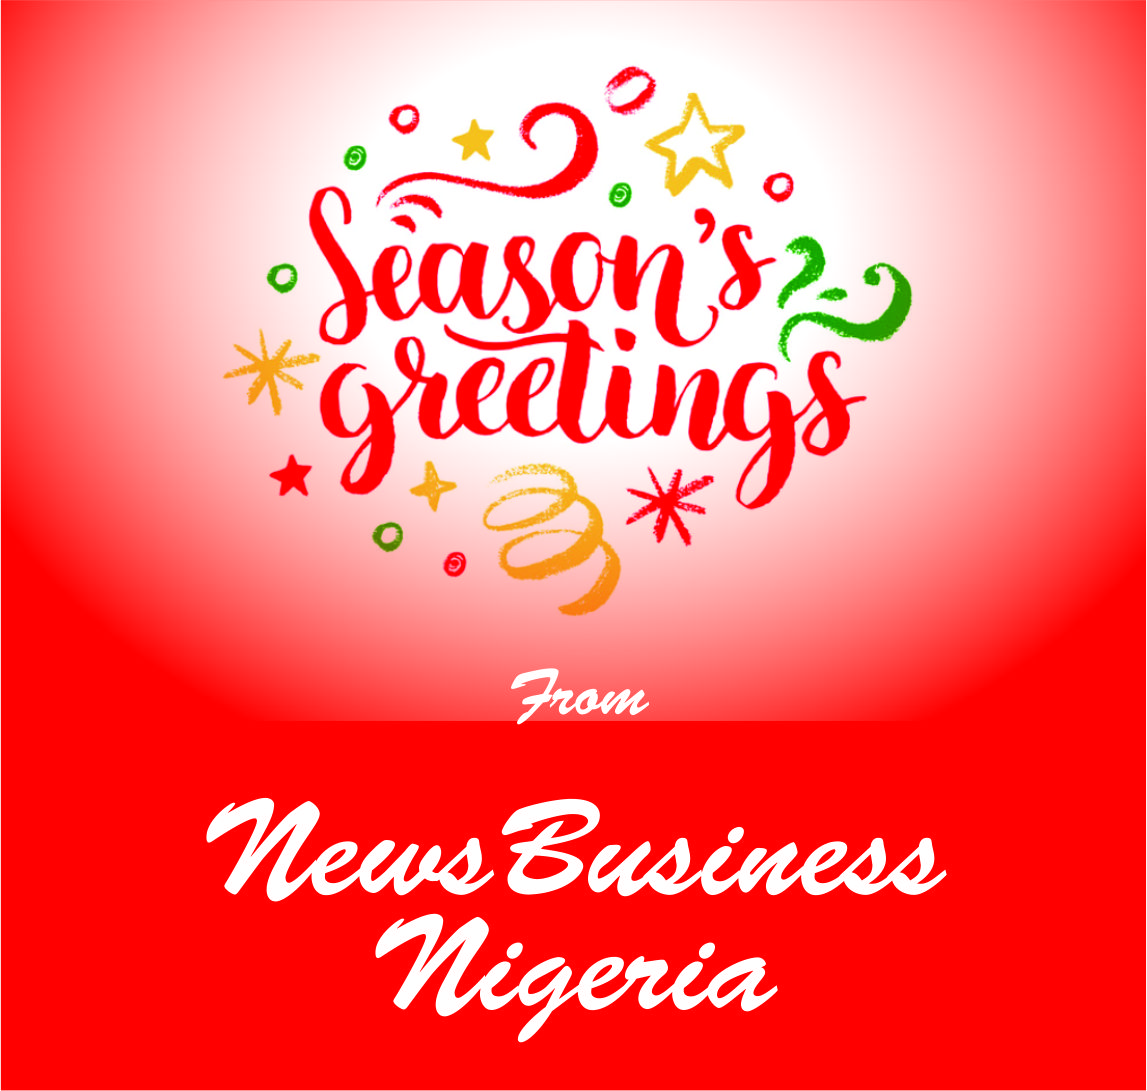 Seasons Greetings From NewsBusiness Nigeria